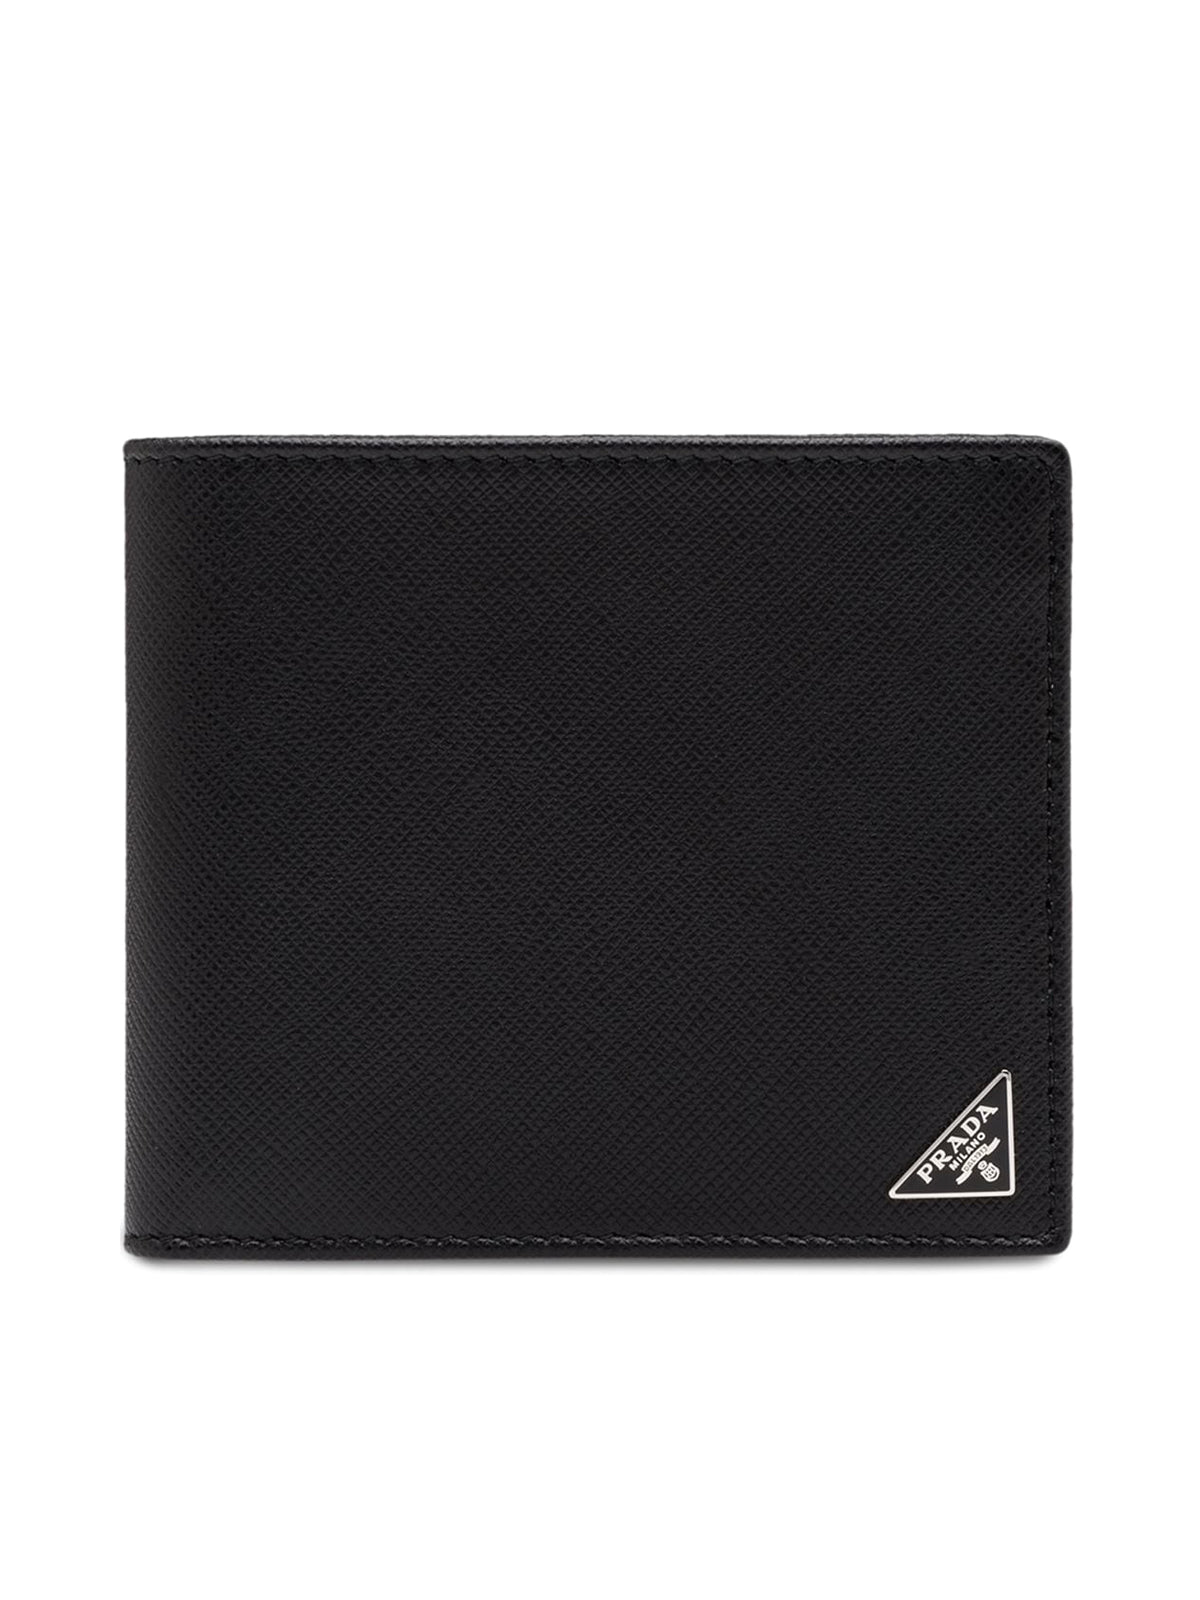 PRADA Saffiano Leather Mens Bi-Fold Wallet Black